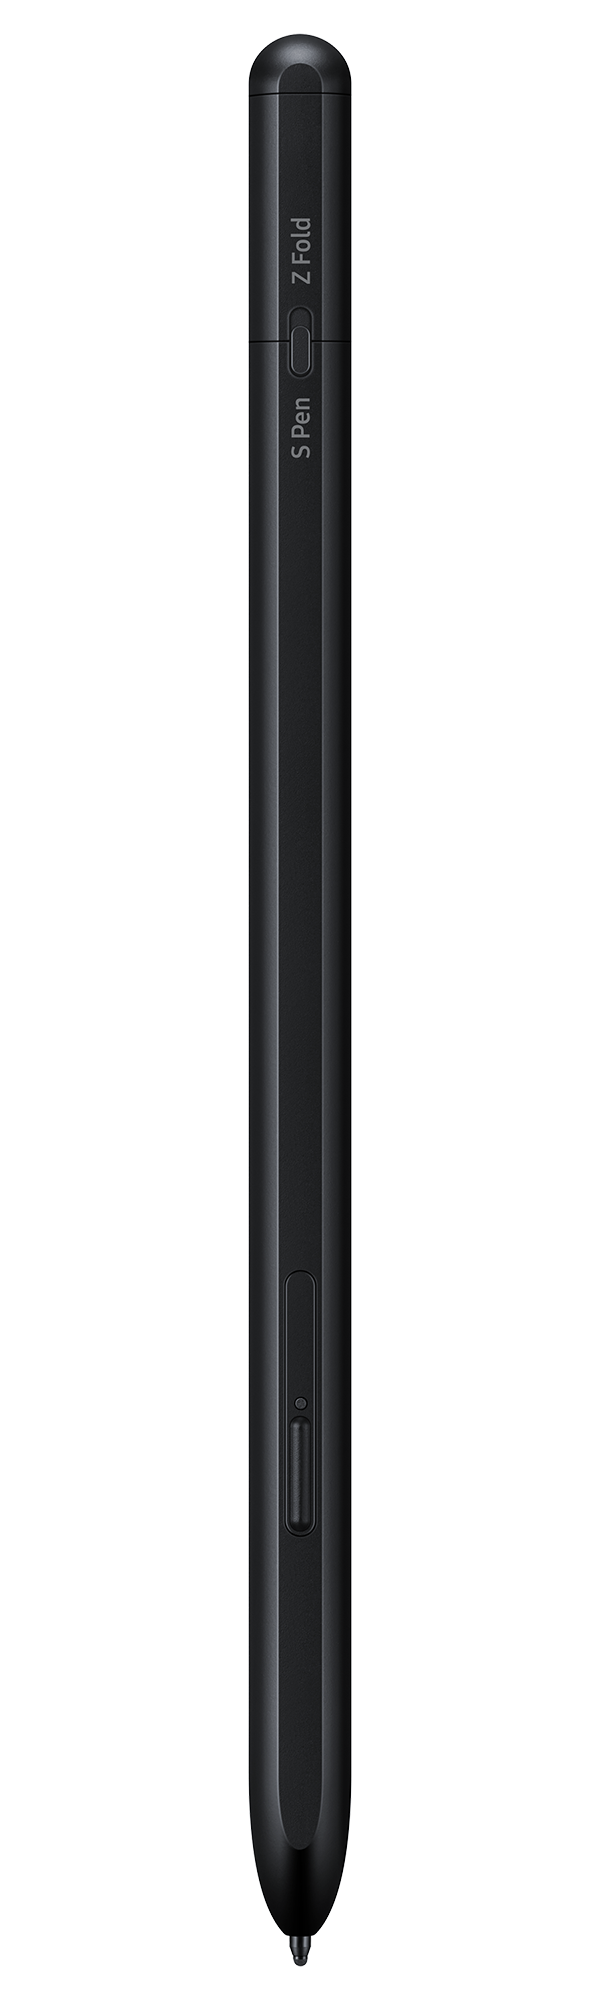 Samsung Galaxy S Pen Pro Black